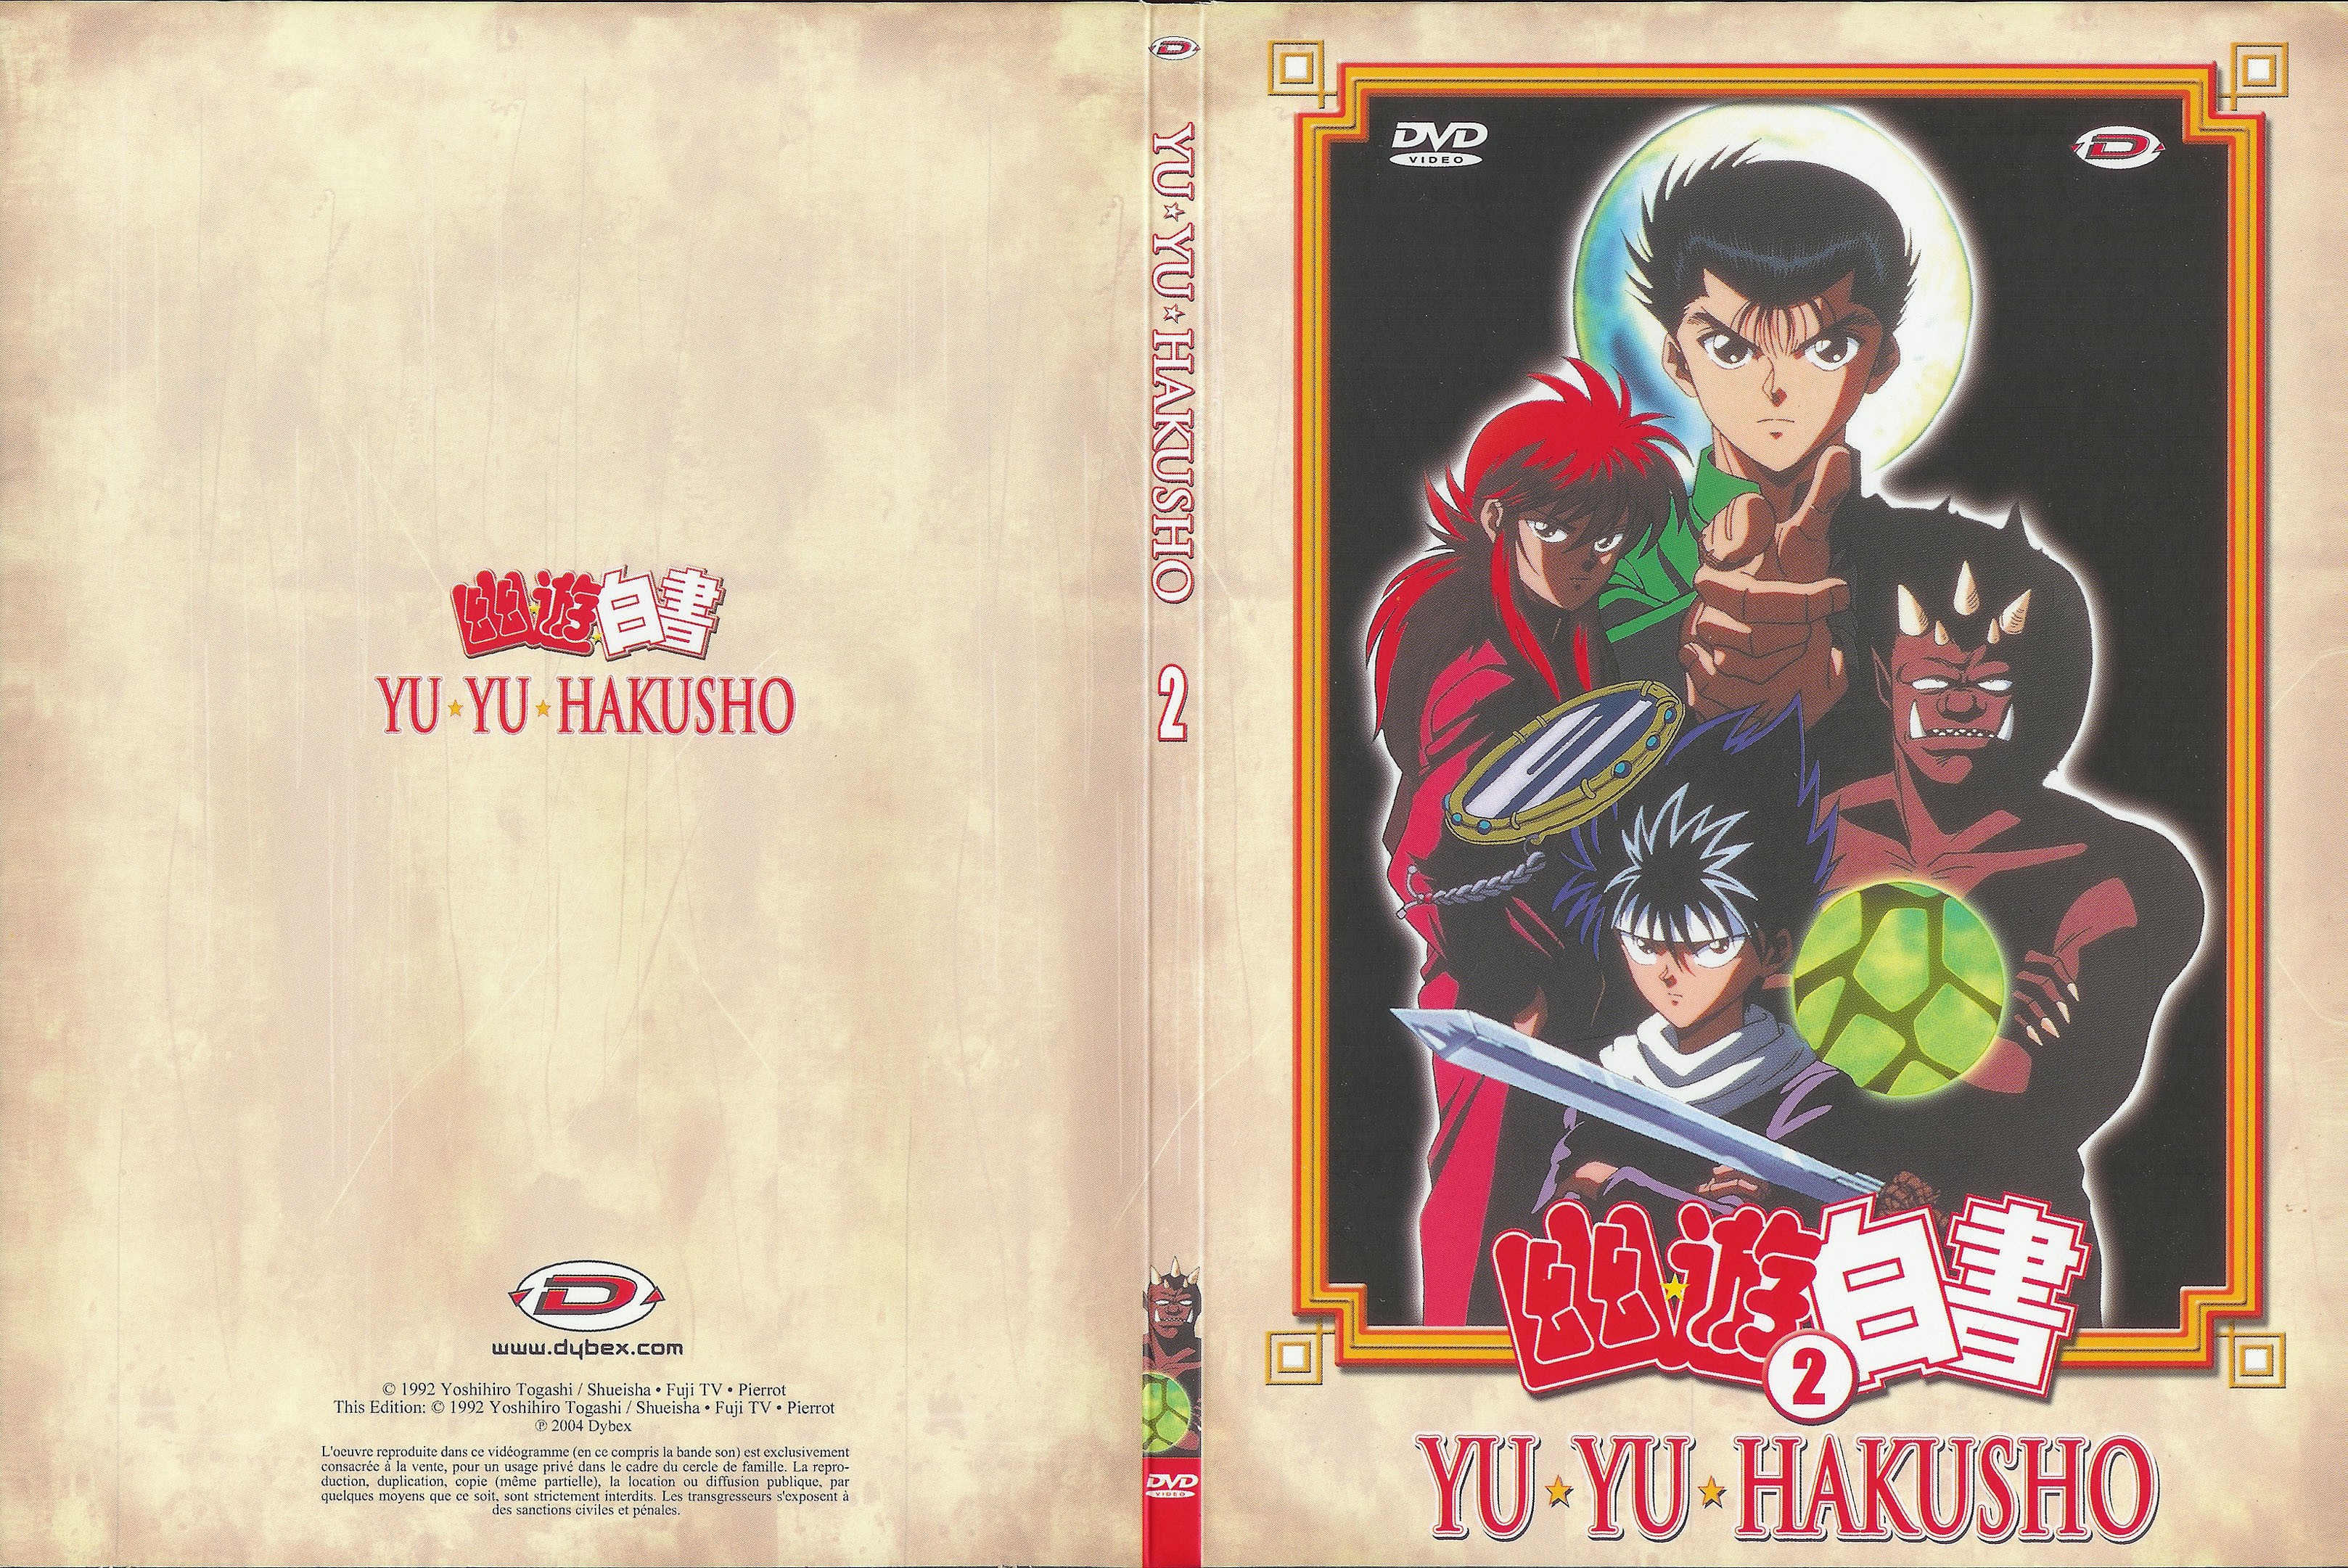 Jaquette DVD Yu yu hakusho vol 02